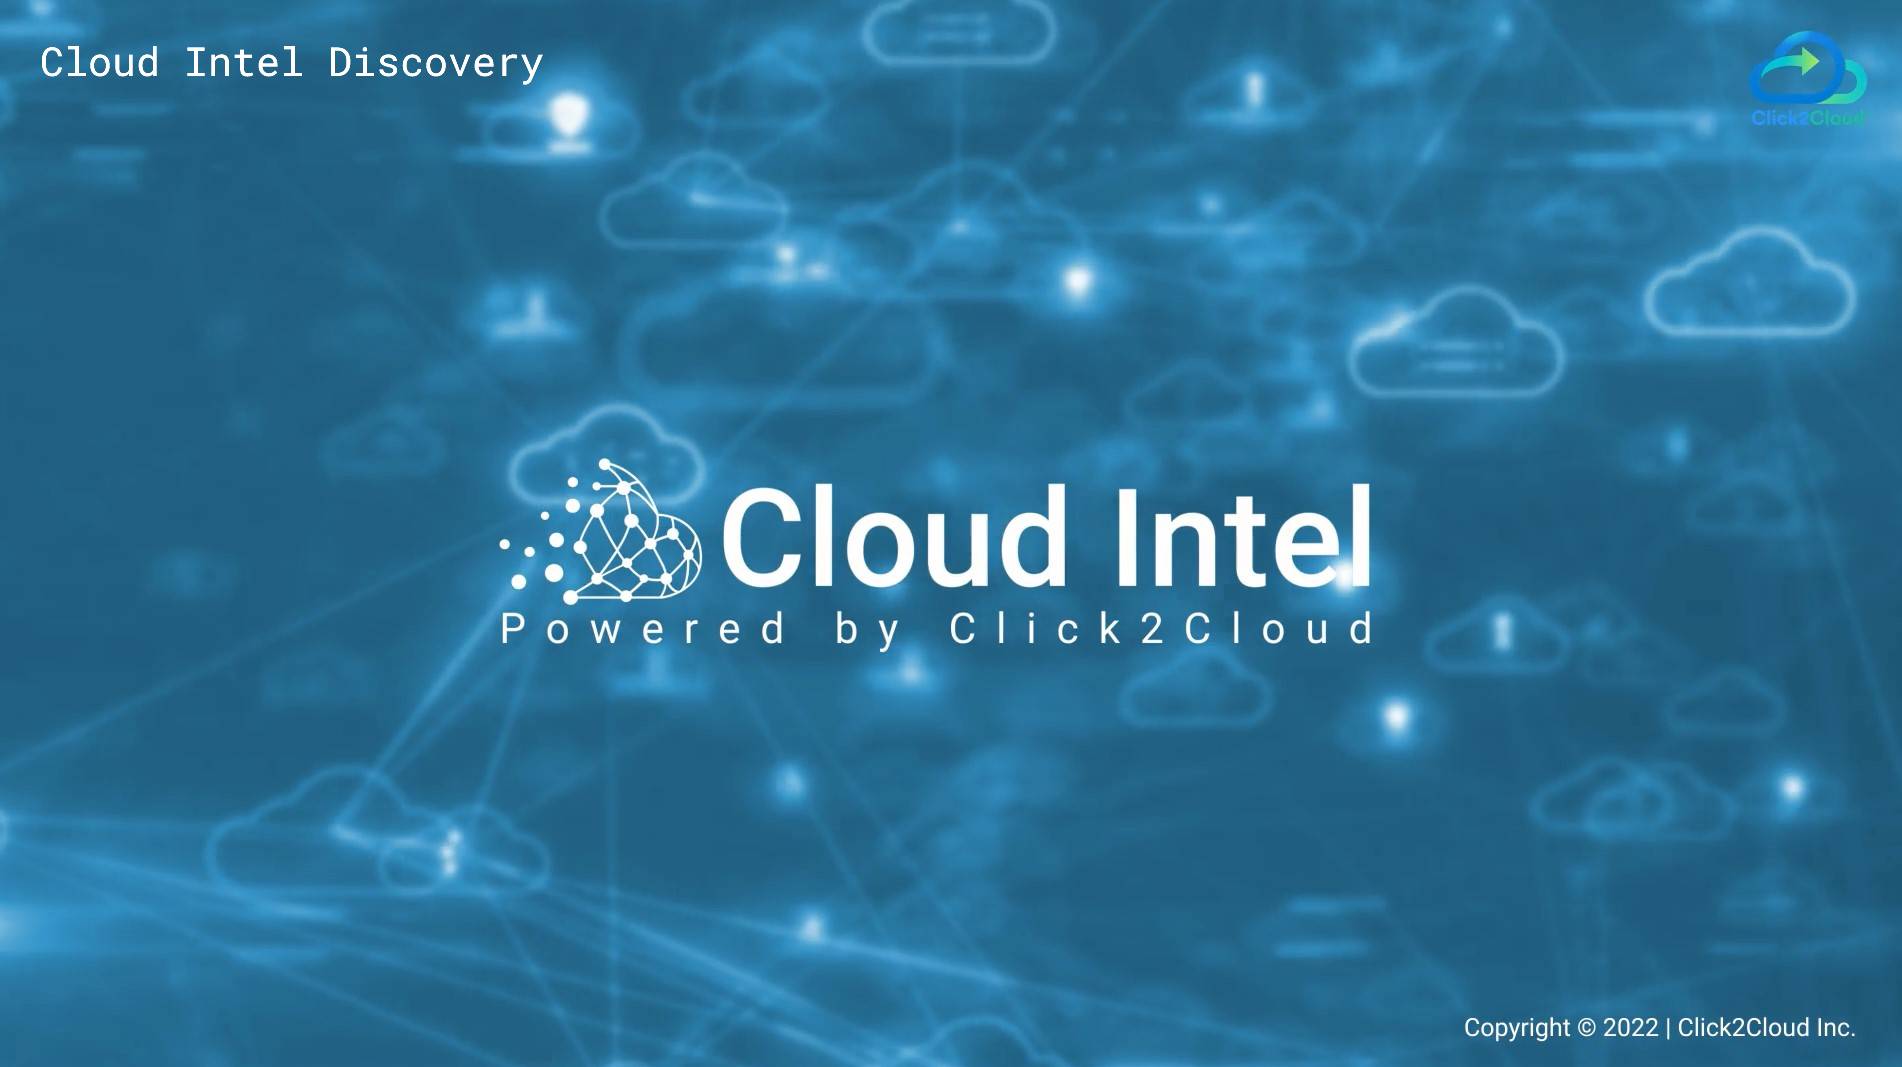 Click2cloud-Cloud Discovery through Cloud Intel_Video